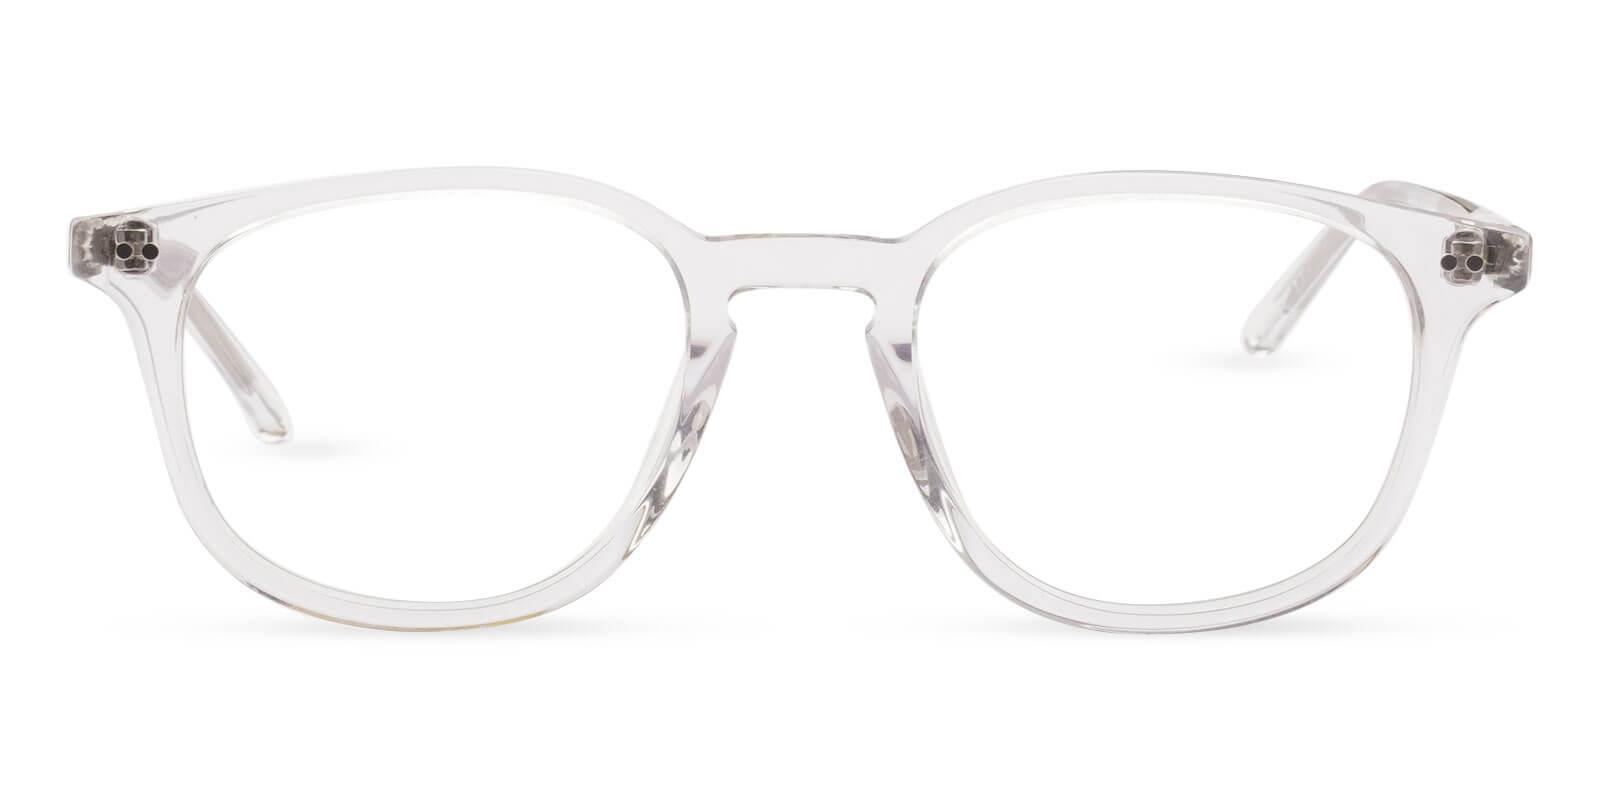 Venus Translucent Acetate Eyeglasses , UniversalBridgeFit Frames from ABBE Glasses